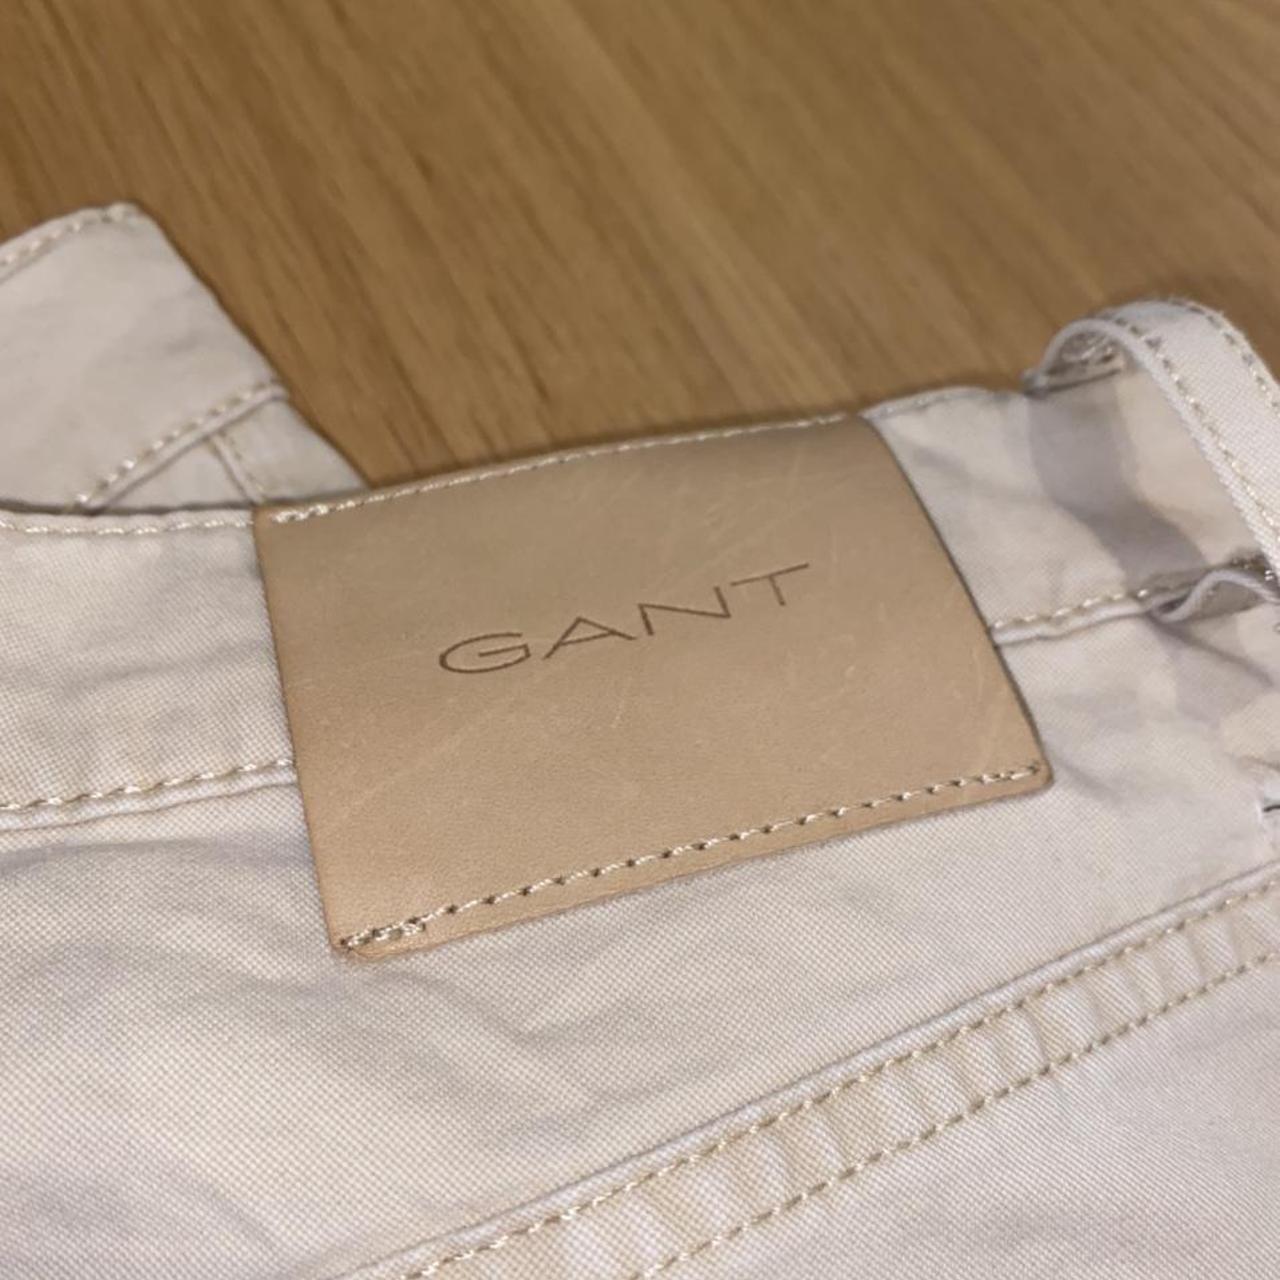 Product Image 3 - Cream Gant smart chinos, slightly